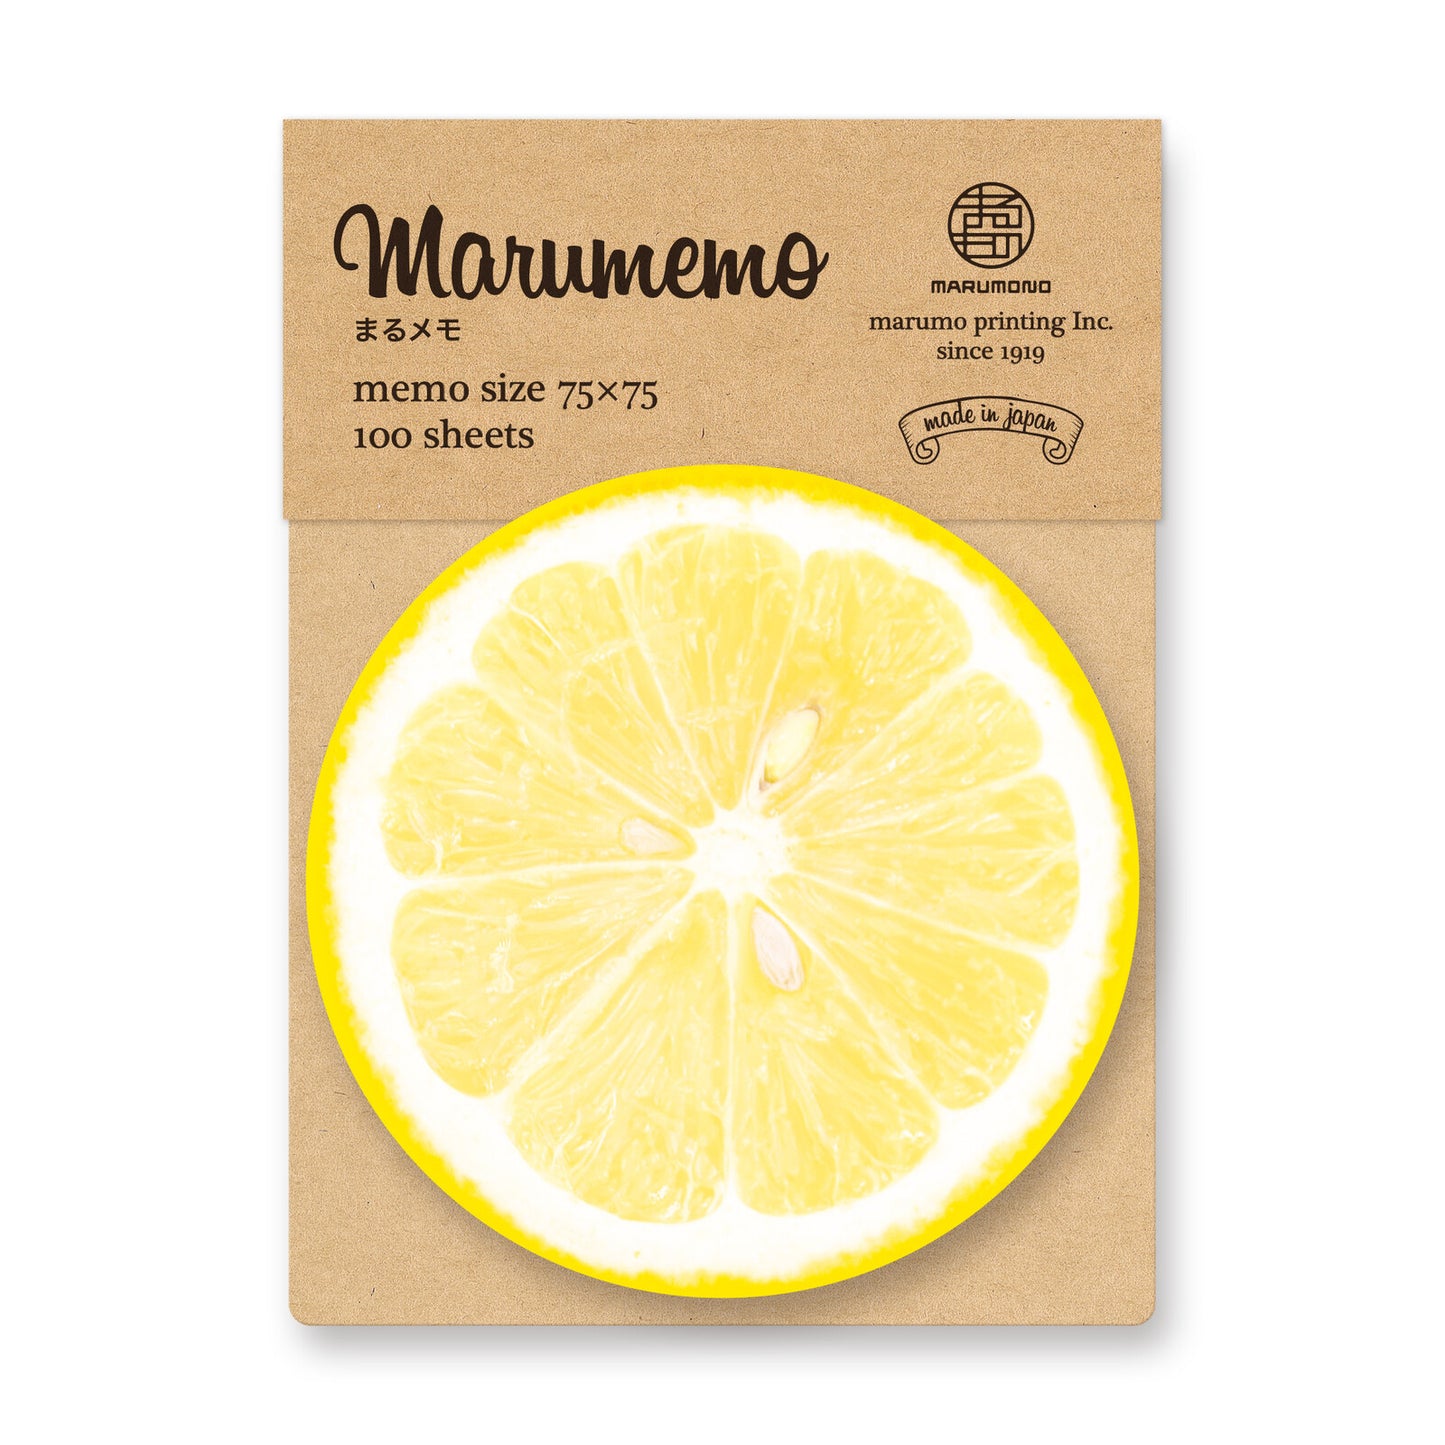 Lemon Marumemo Message Pads - Odd Nodd Art Supply